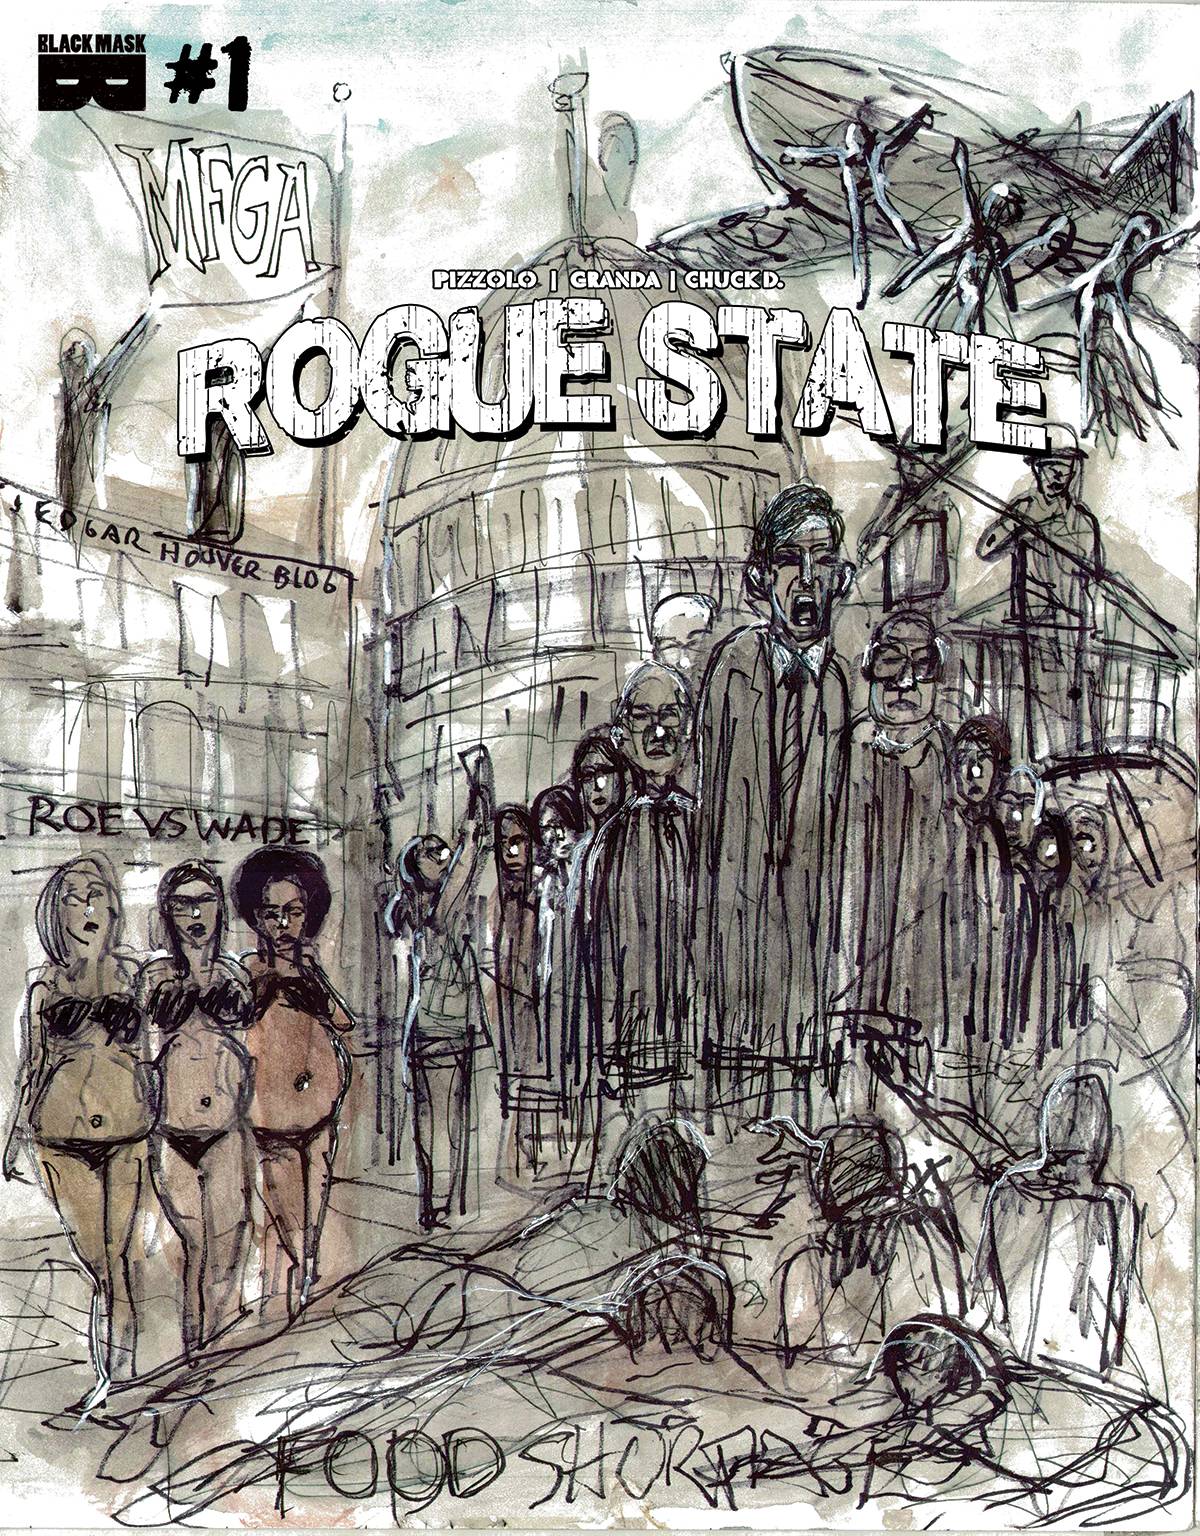 ROGUE STATE #1 CVR F CHUCK D COVER (MR)